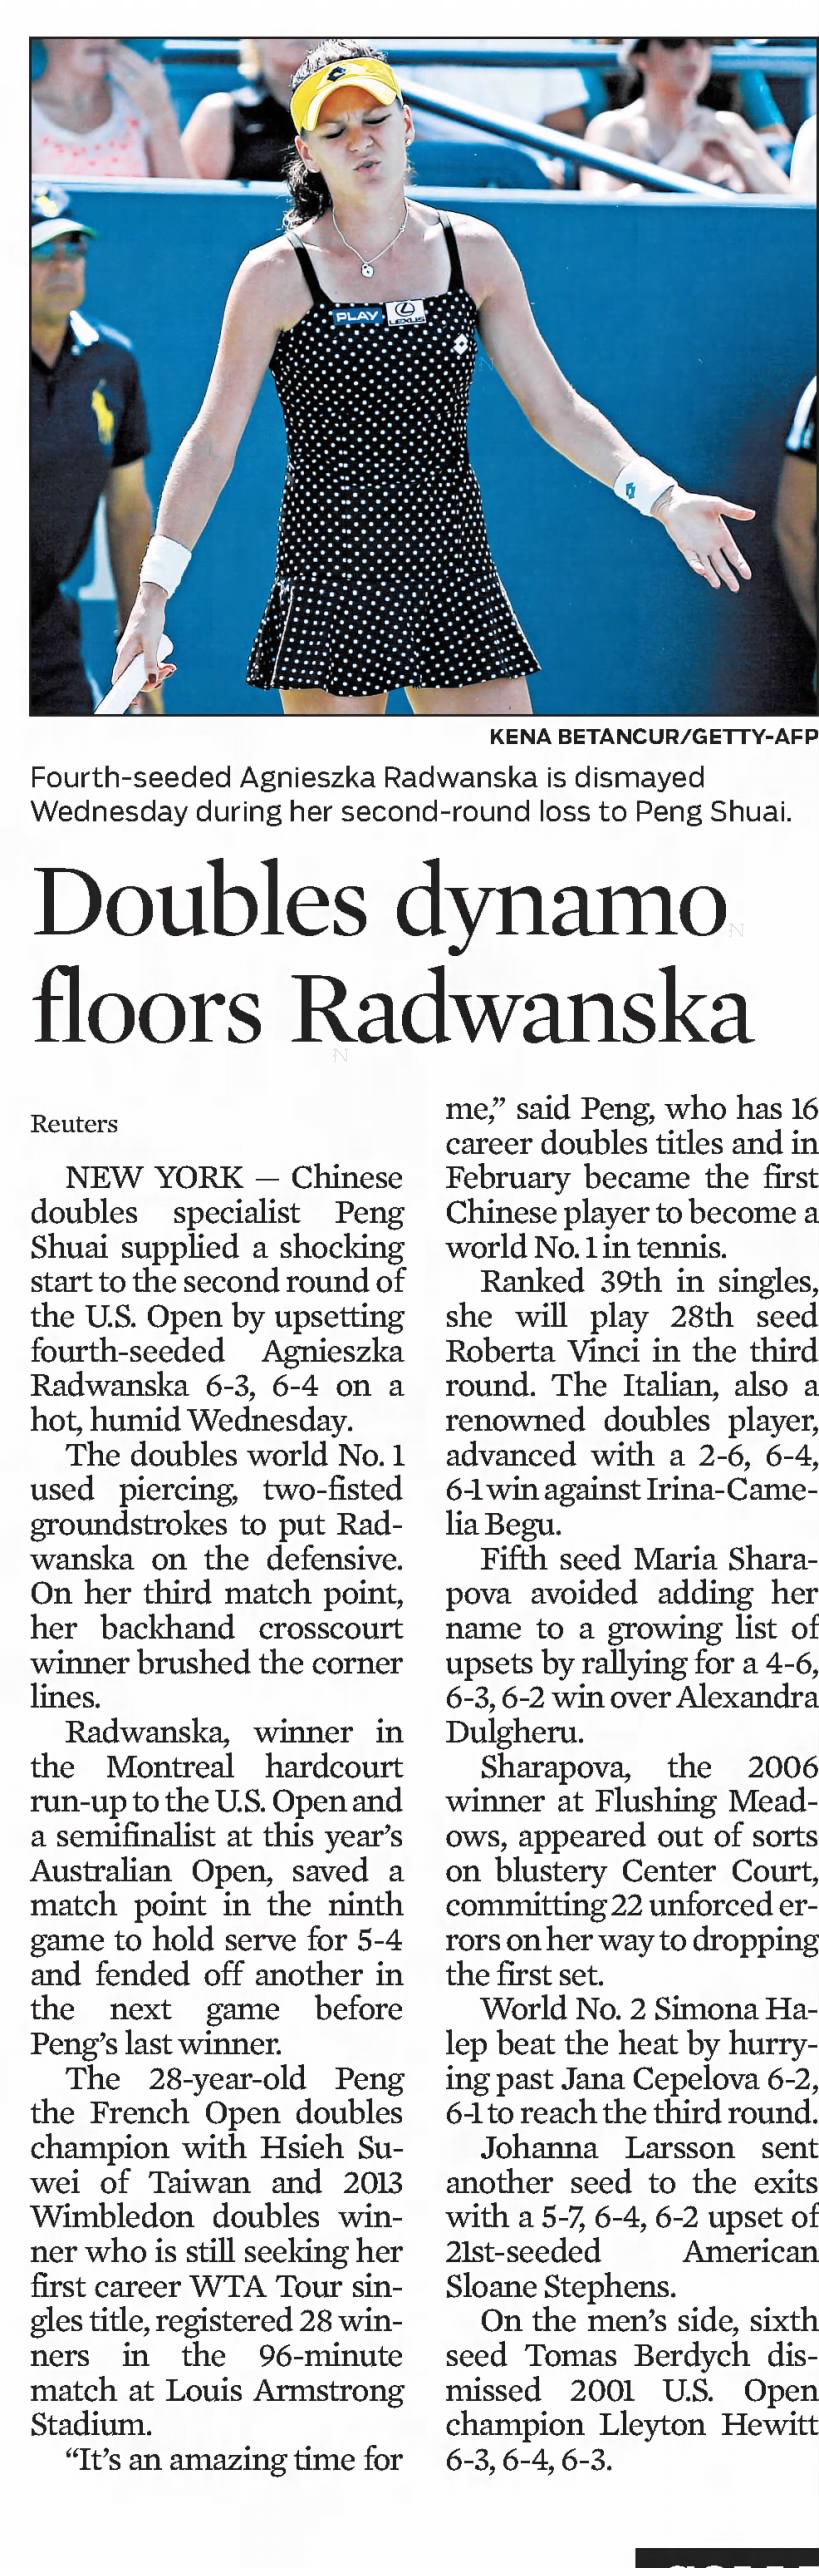 Doubles dynamo floors Radwanska